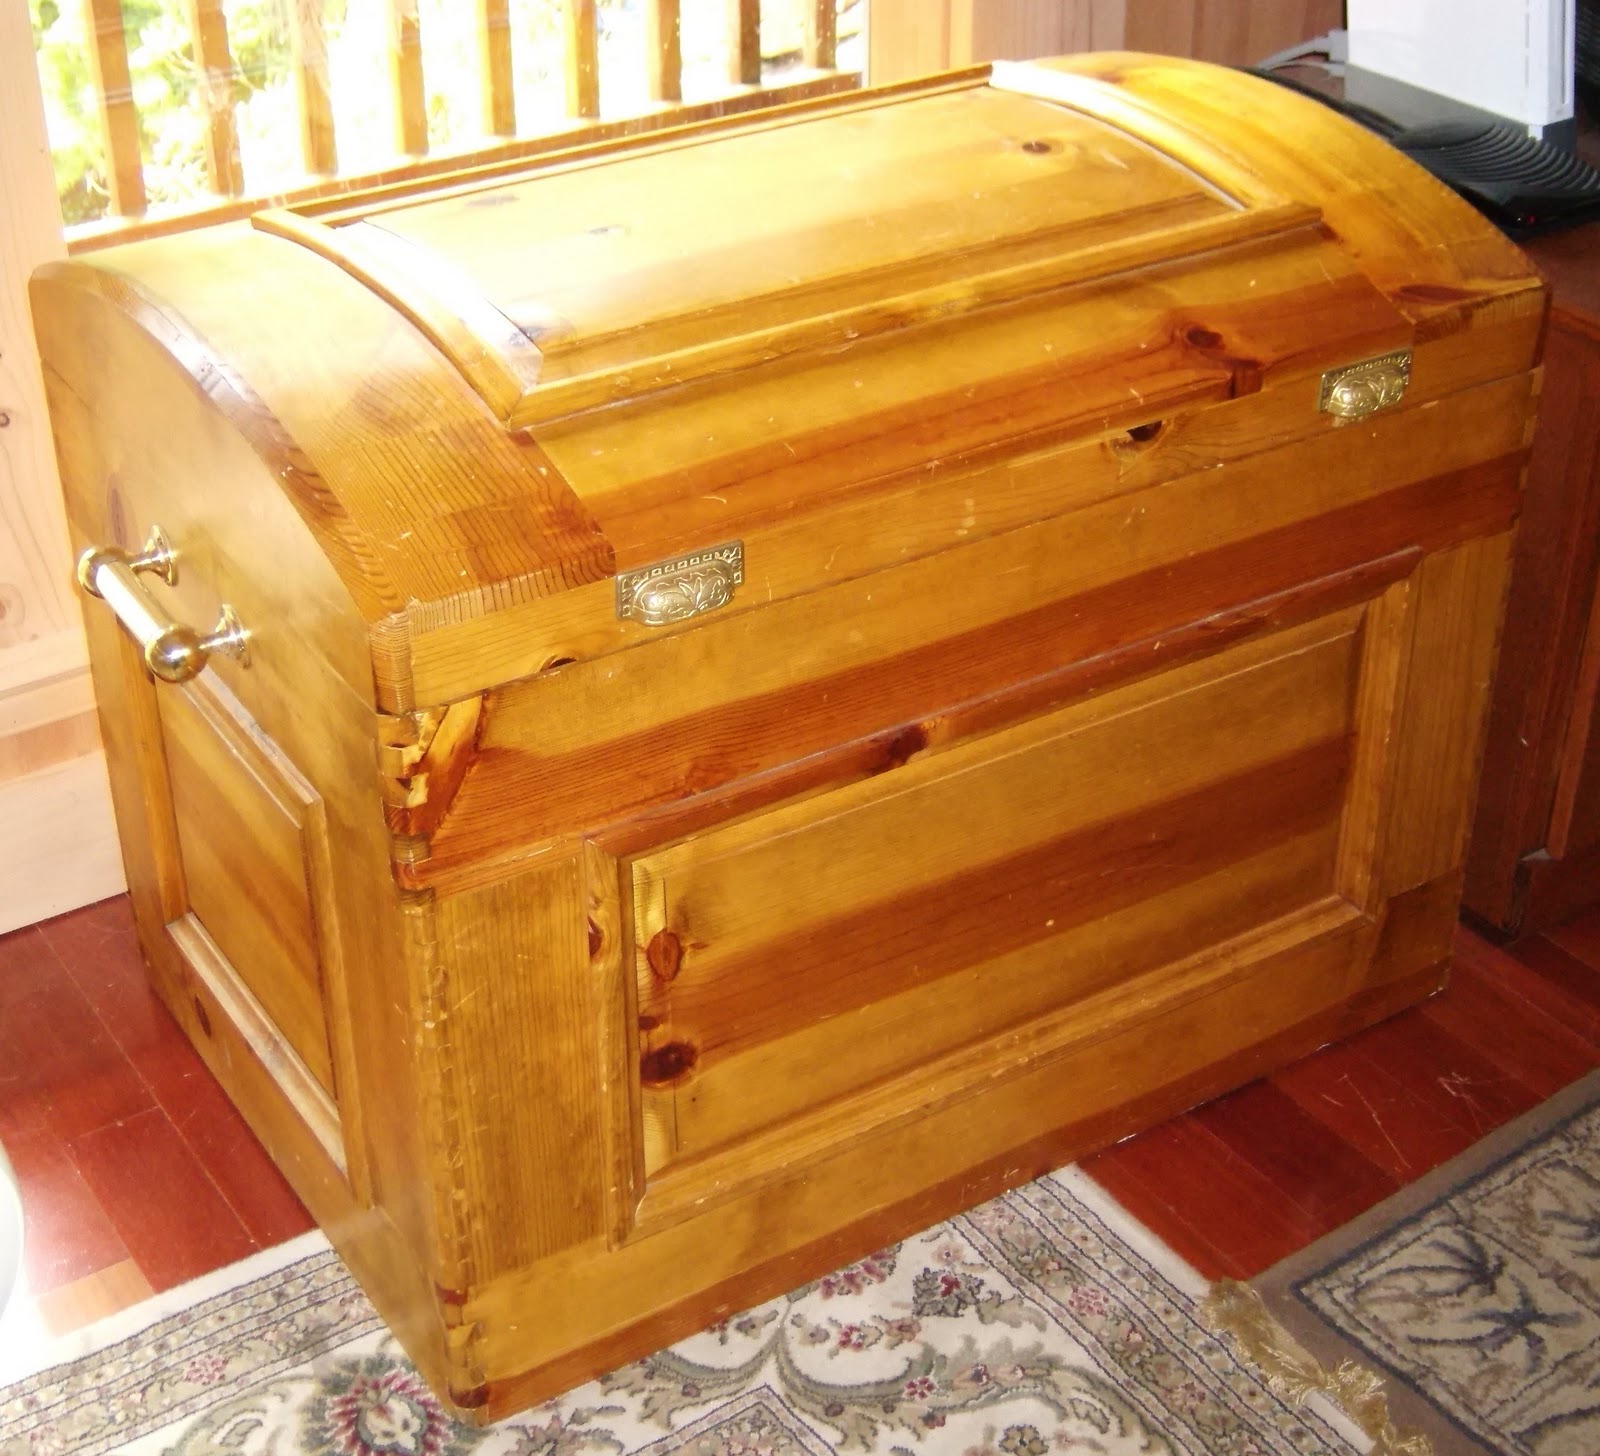 cedar chest woodworking plans » woodworktips